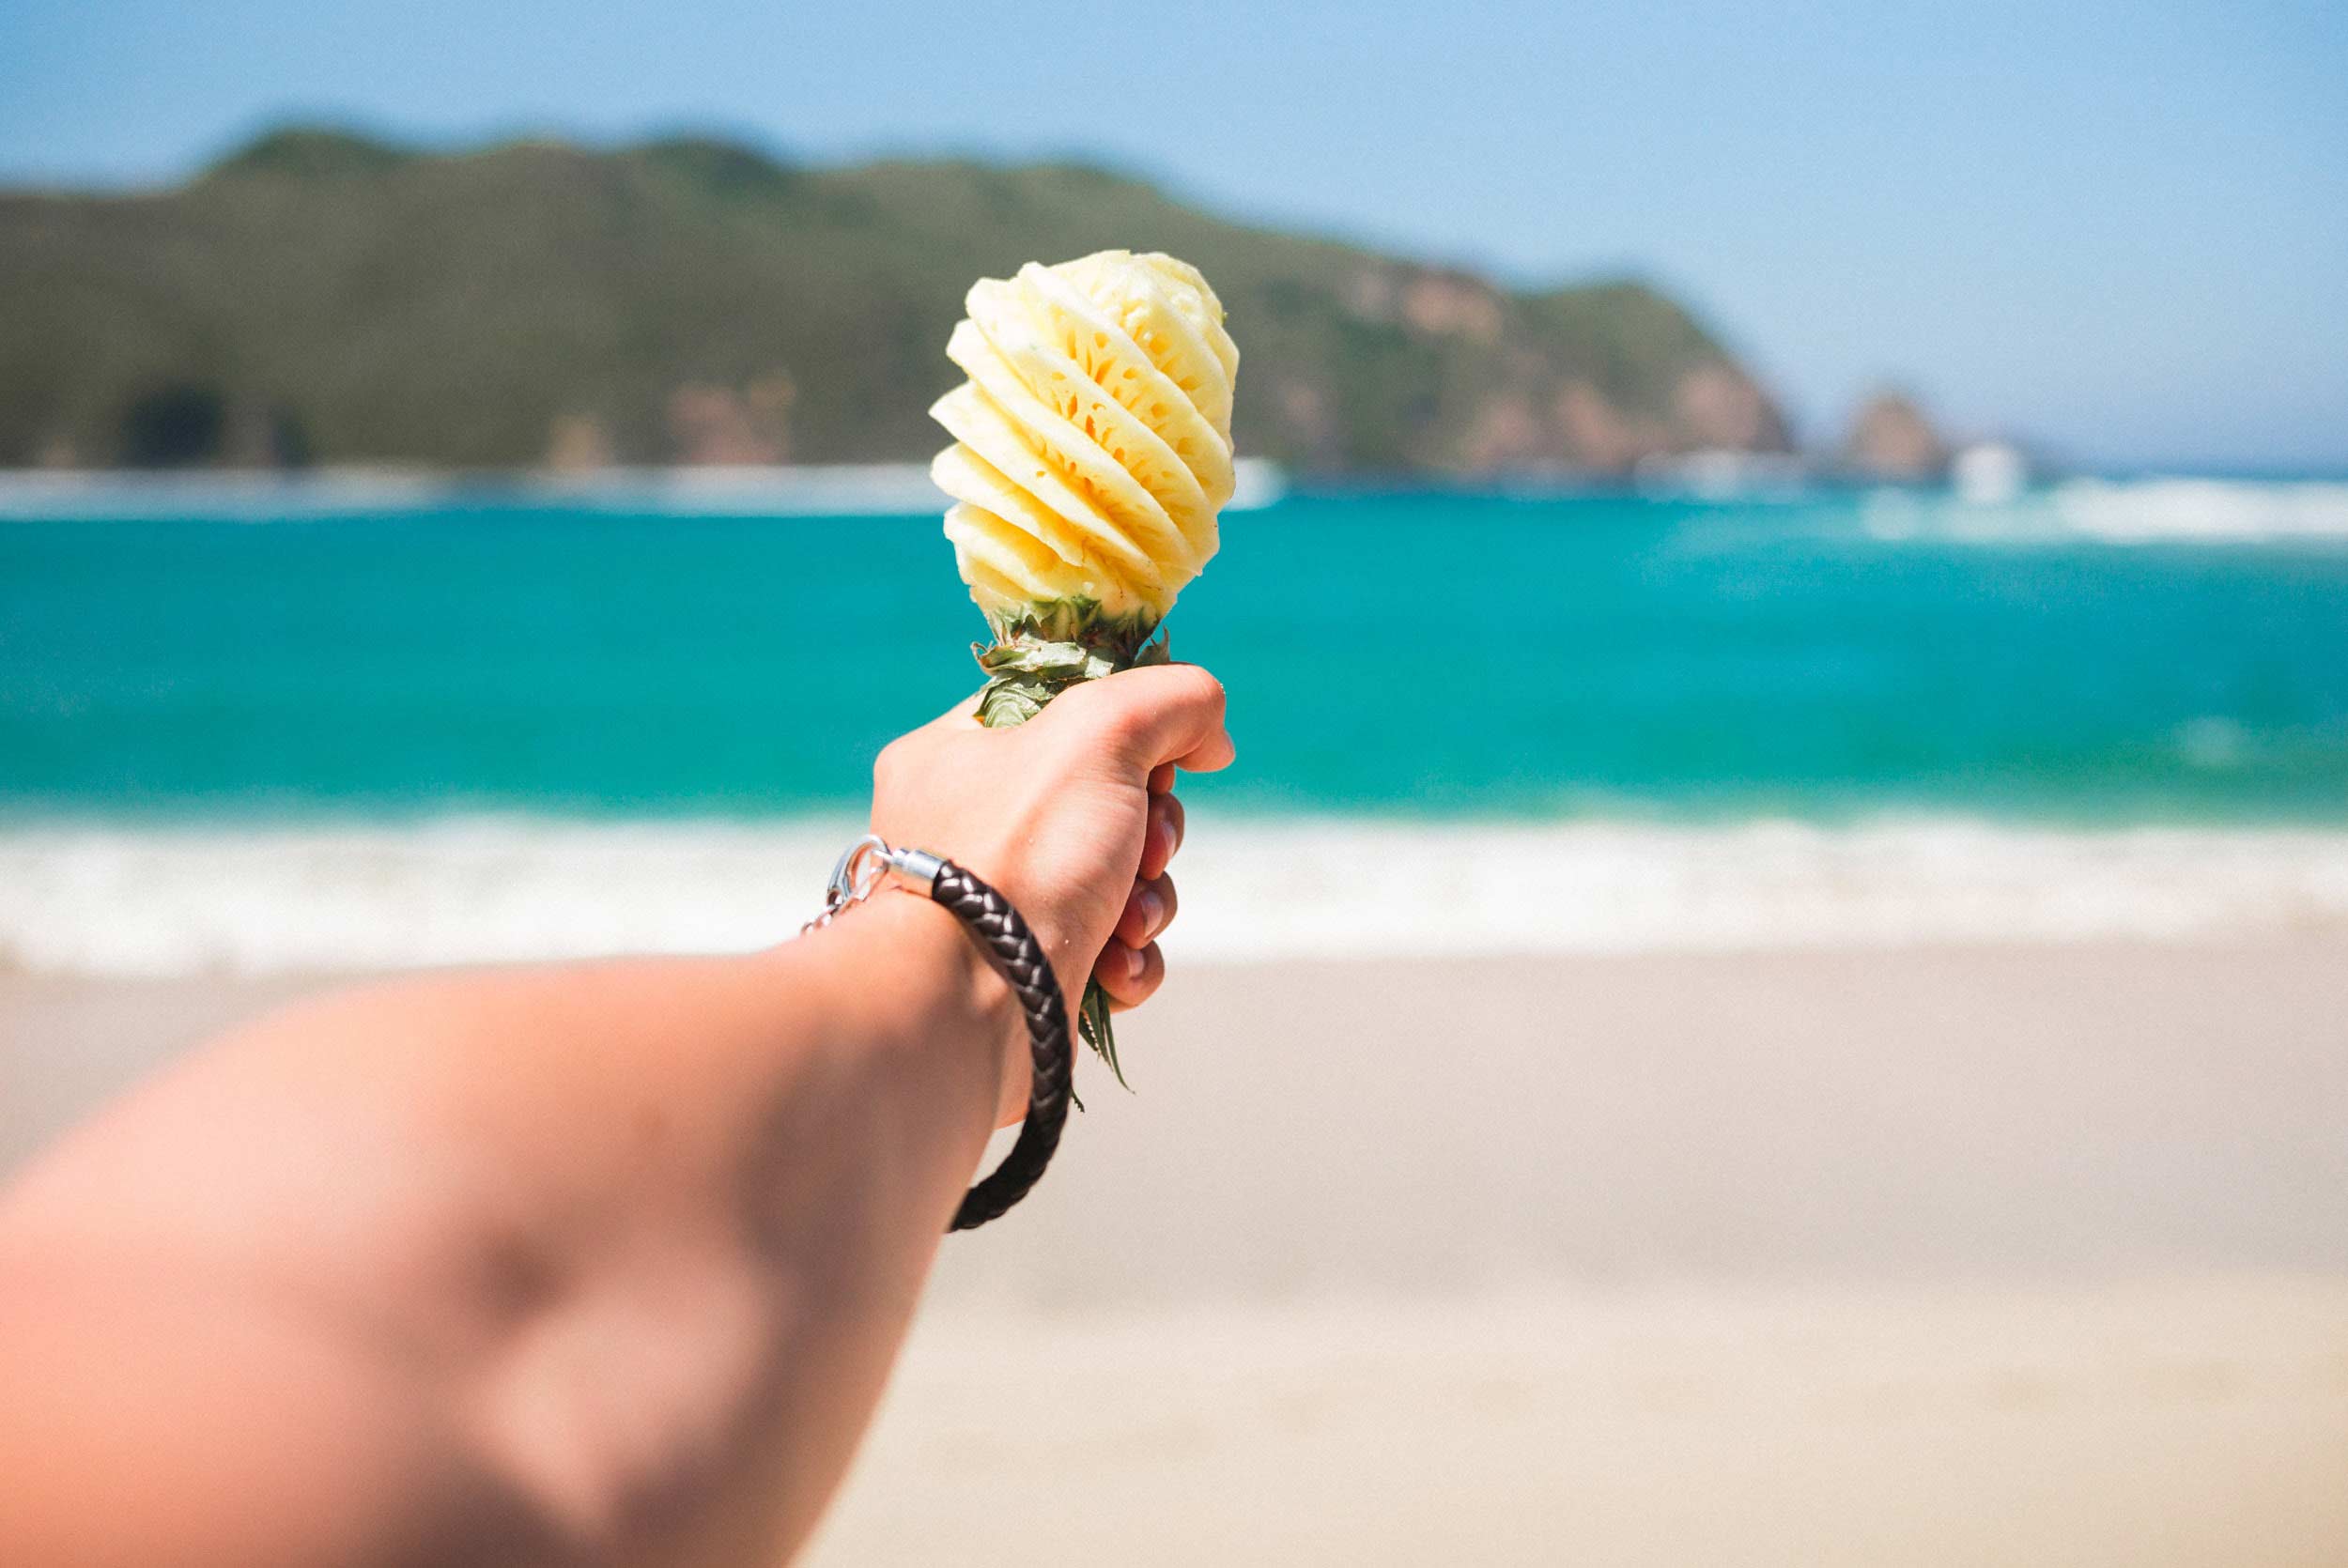 ice cream cone on the beach